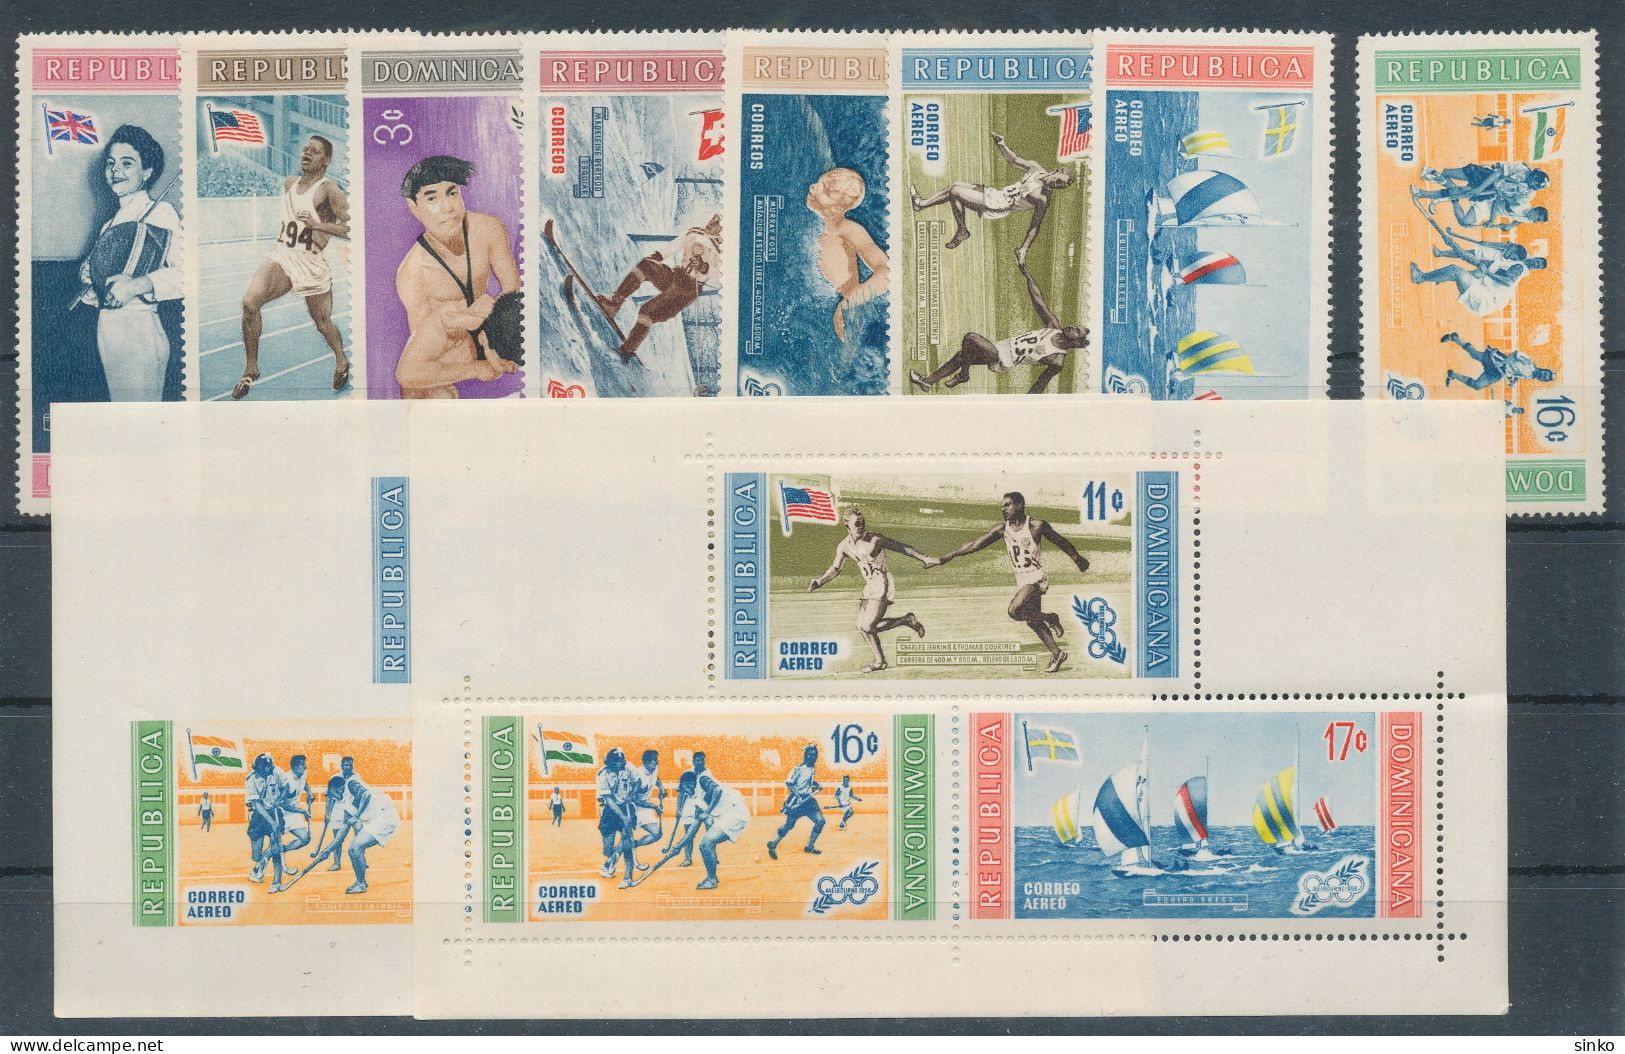 1958. Dominican Republic - Olympics - Ete 1956: Melbourne